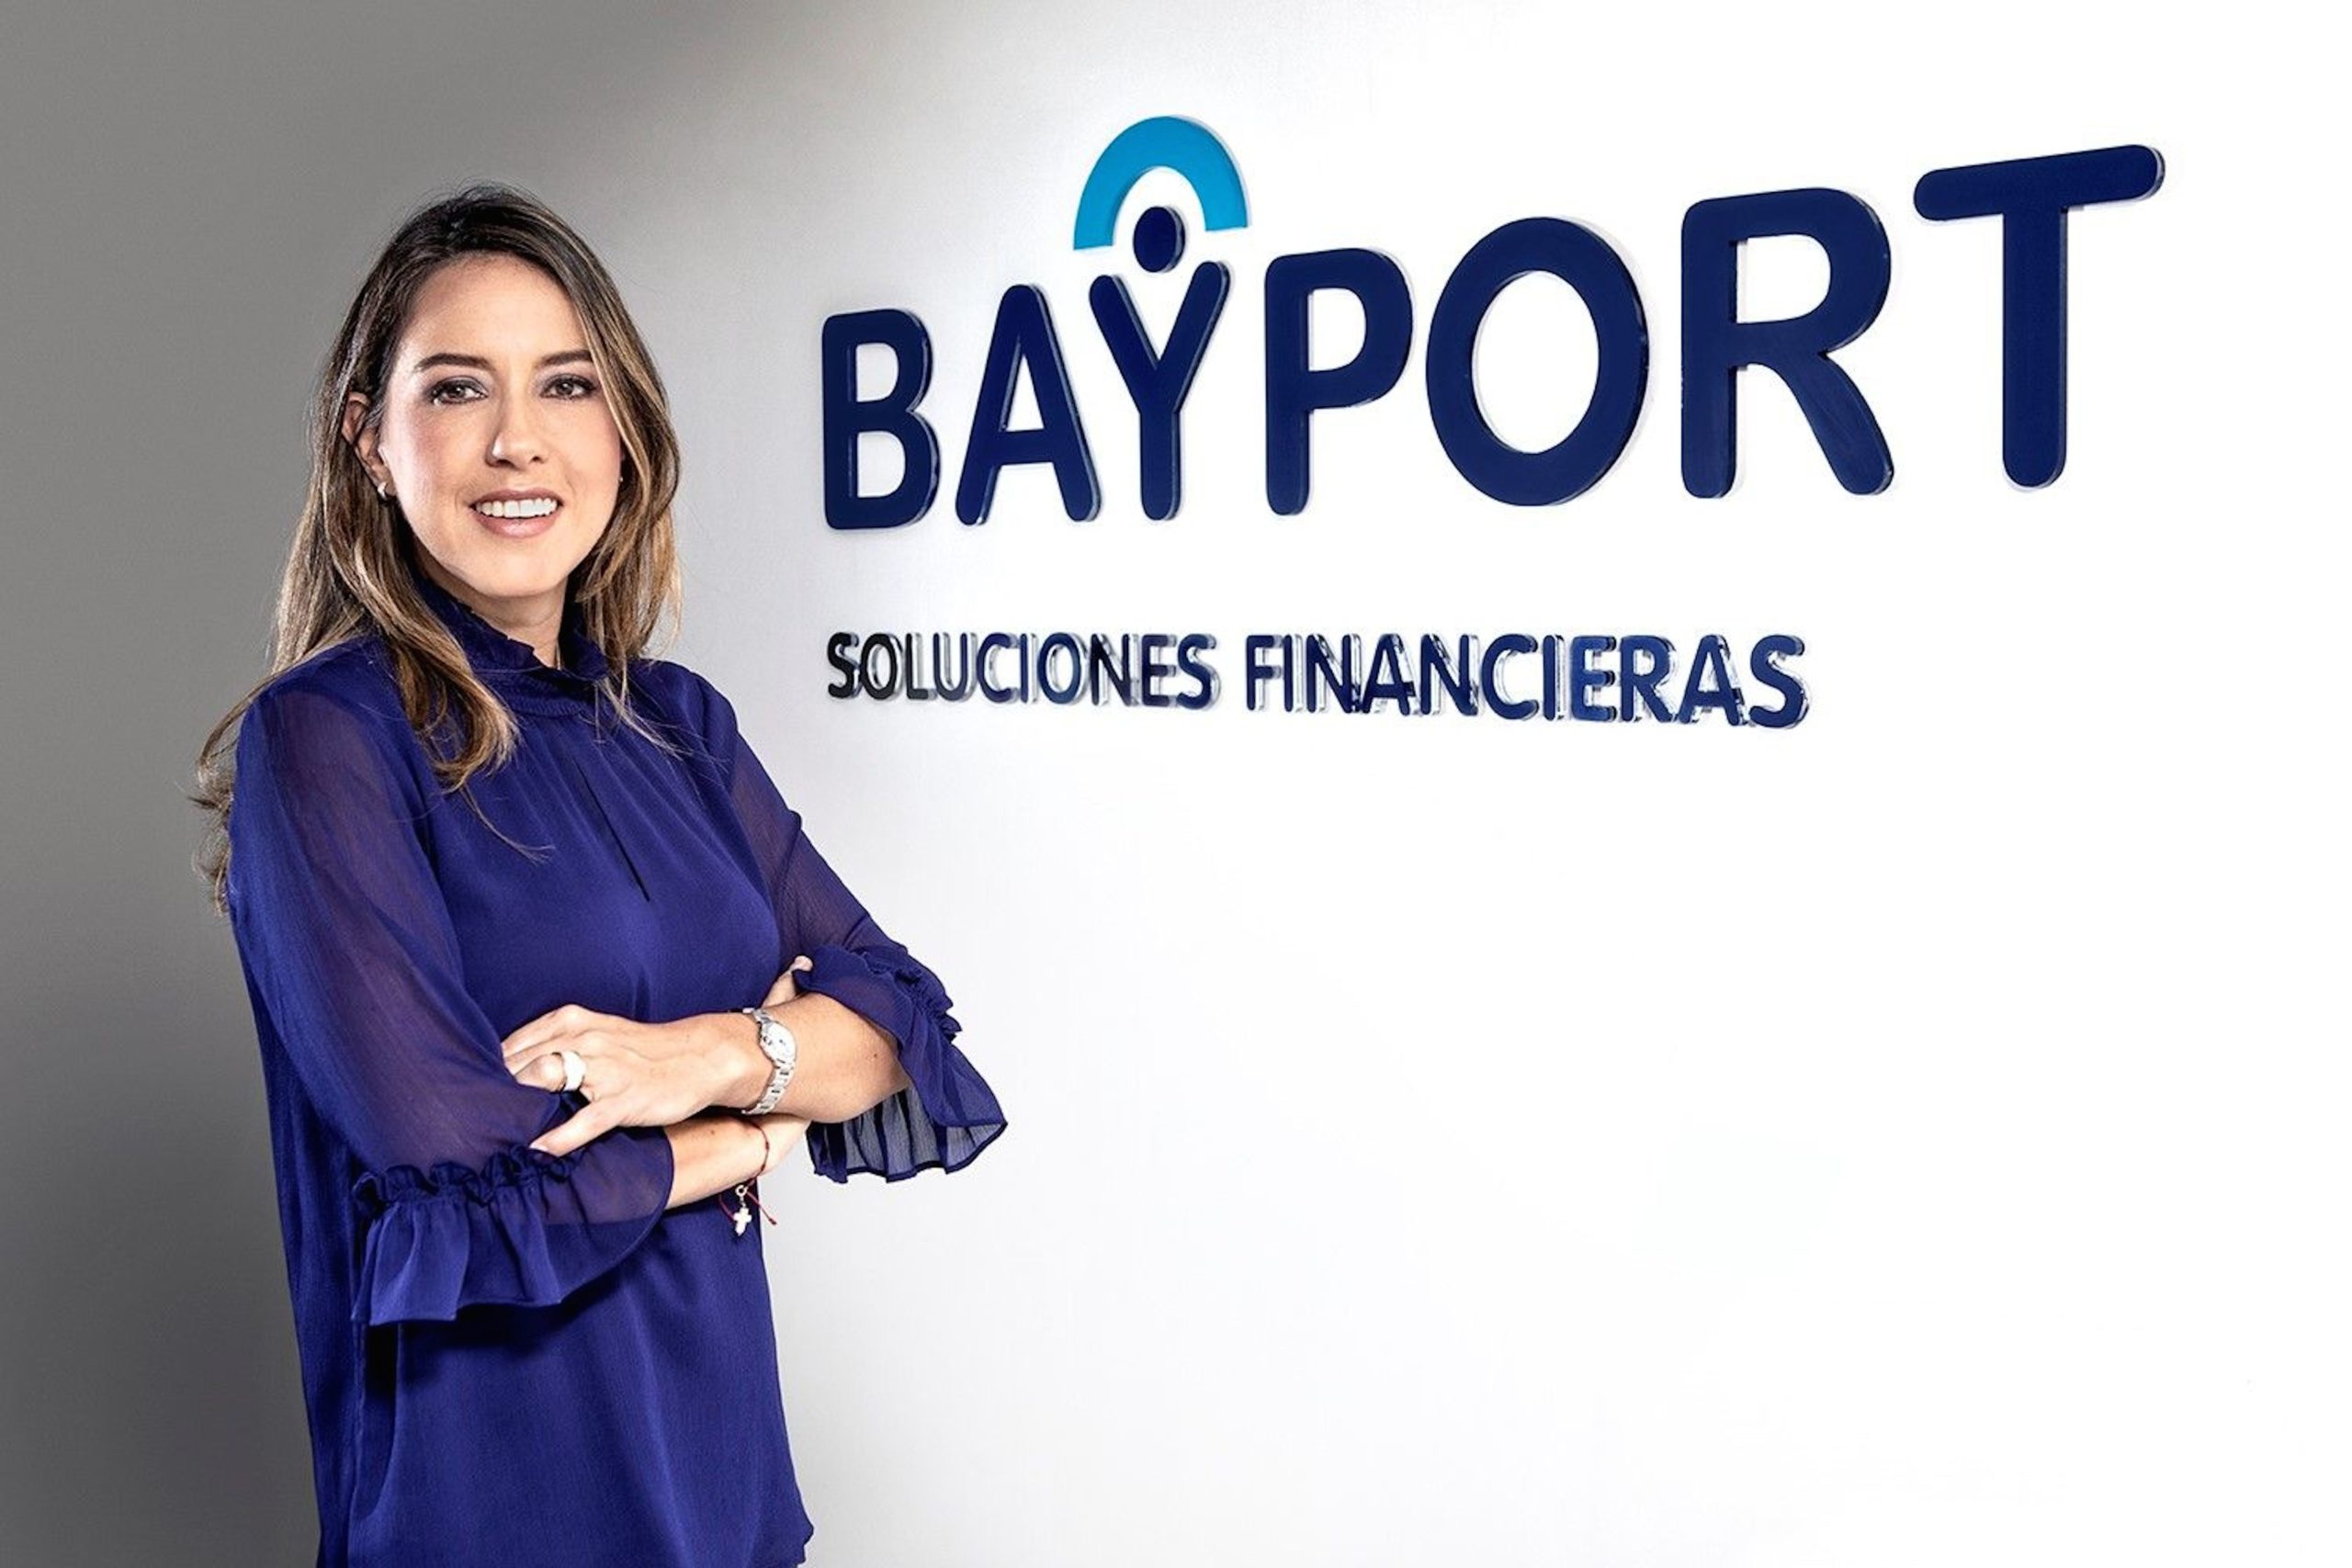 Bayport Colombia recibe 50 mil millones de pesos para fondeo